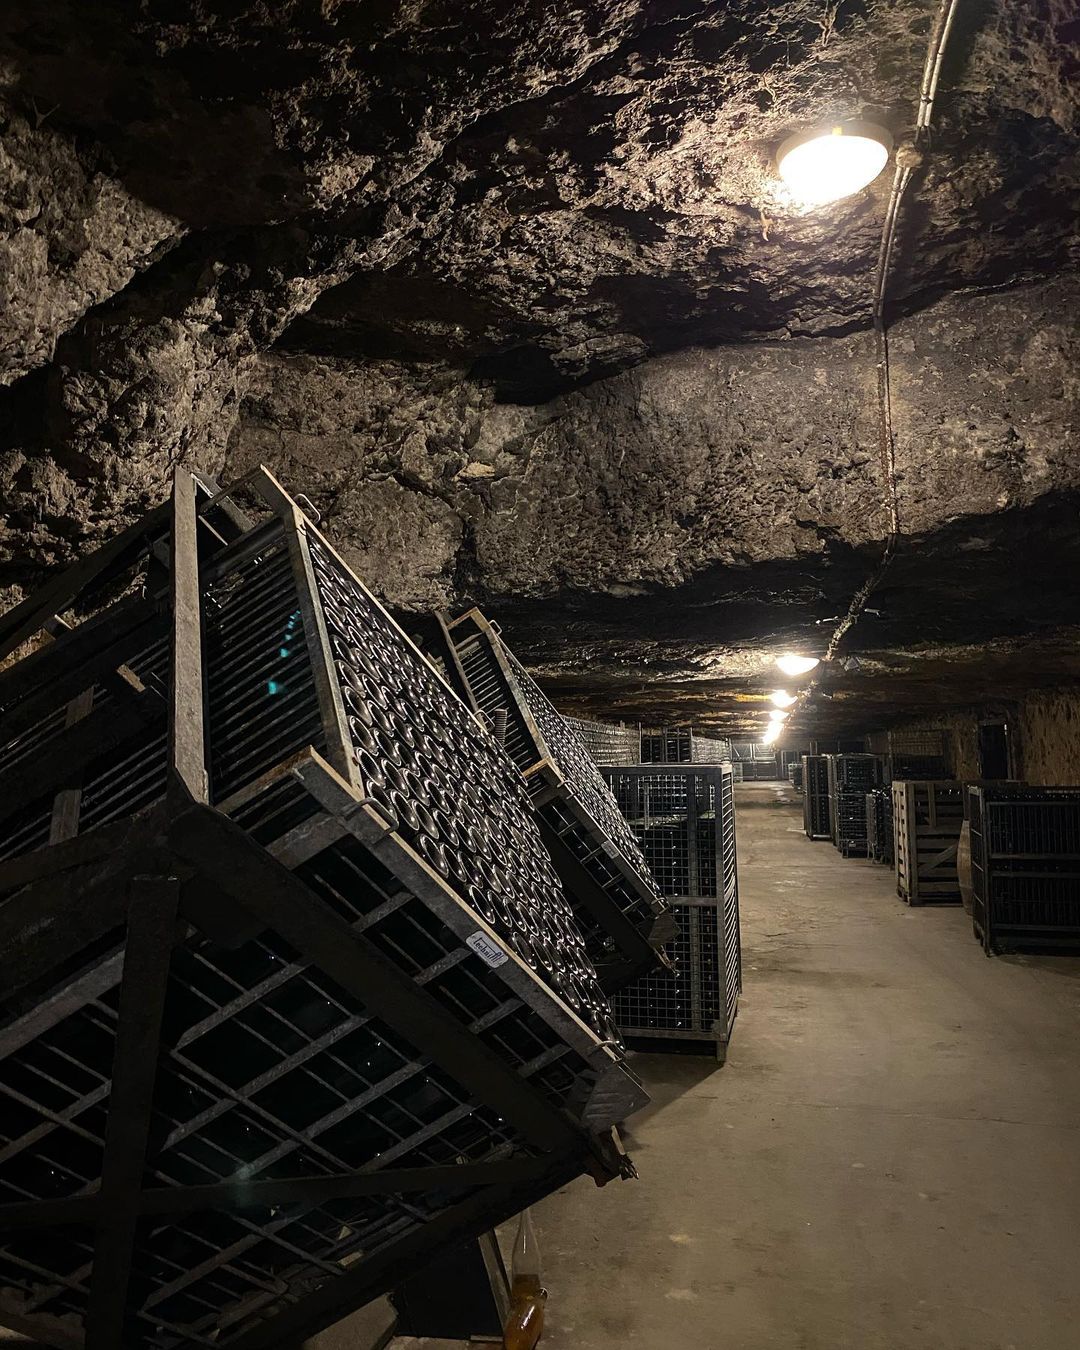  Visit a famous underground troglodyte cellar